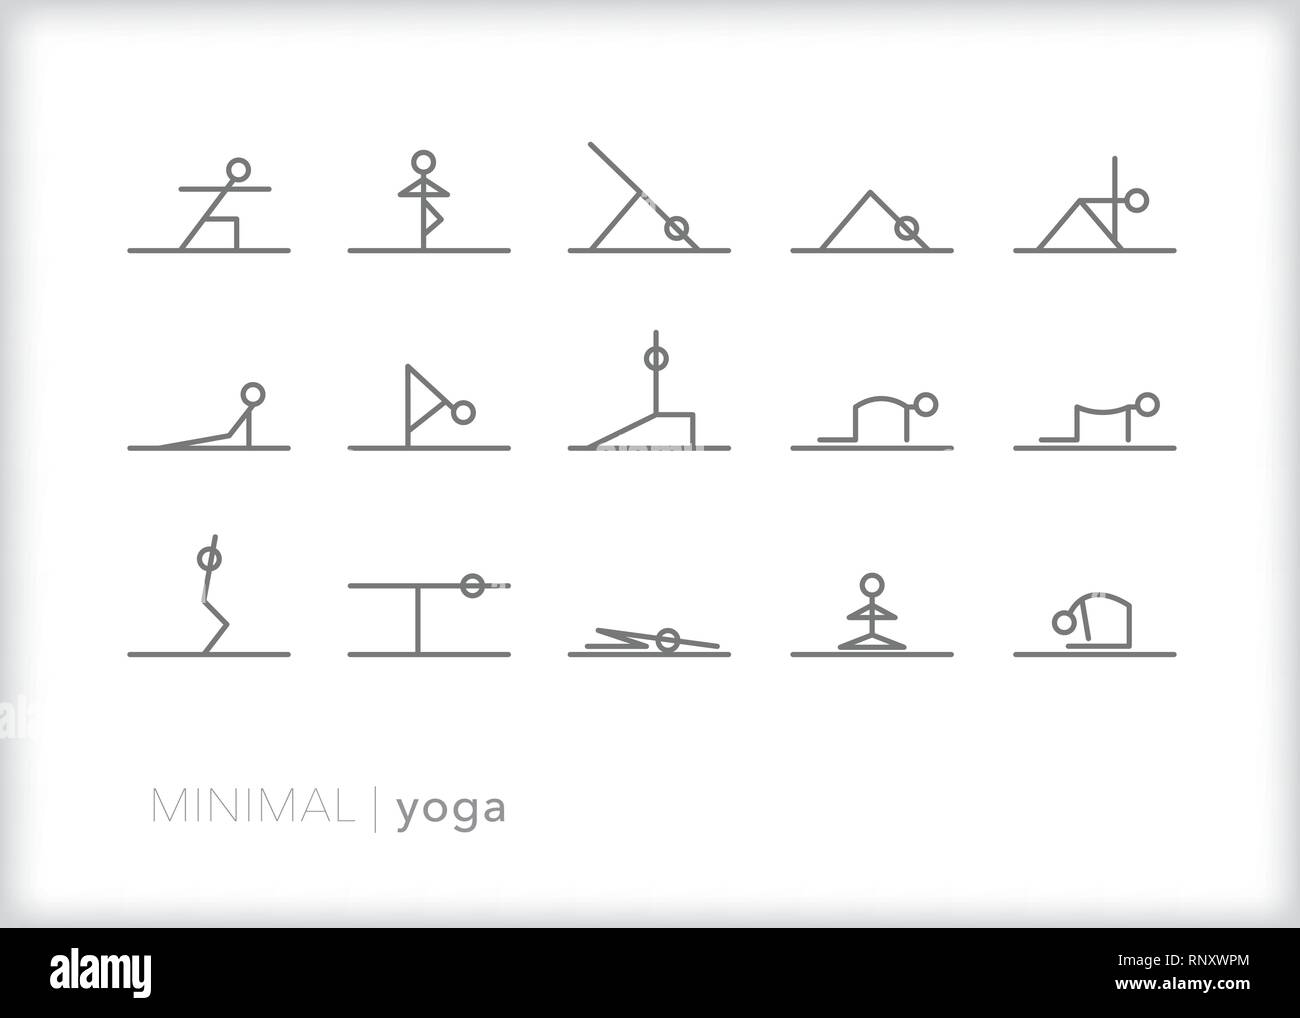 Cartoon icons set of sketch little people stick figures doing yoga Stock  Vector by ©binik1 144145909